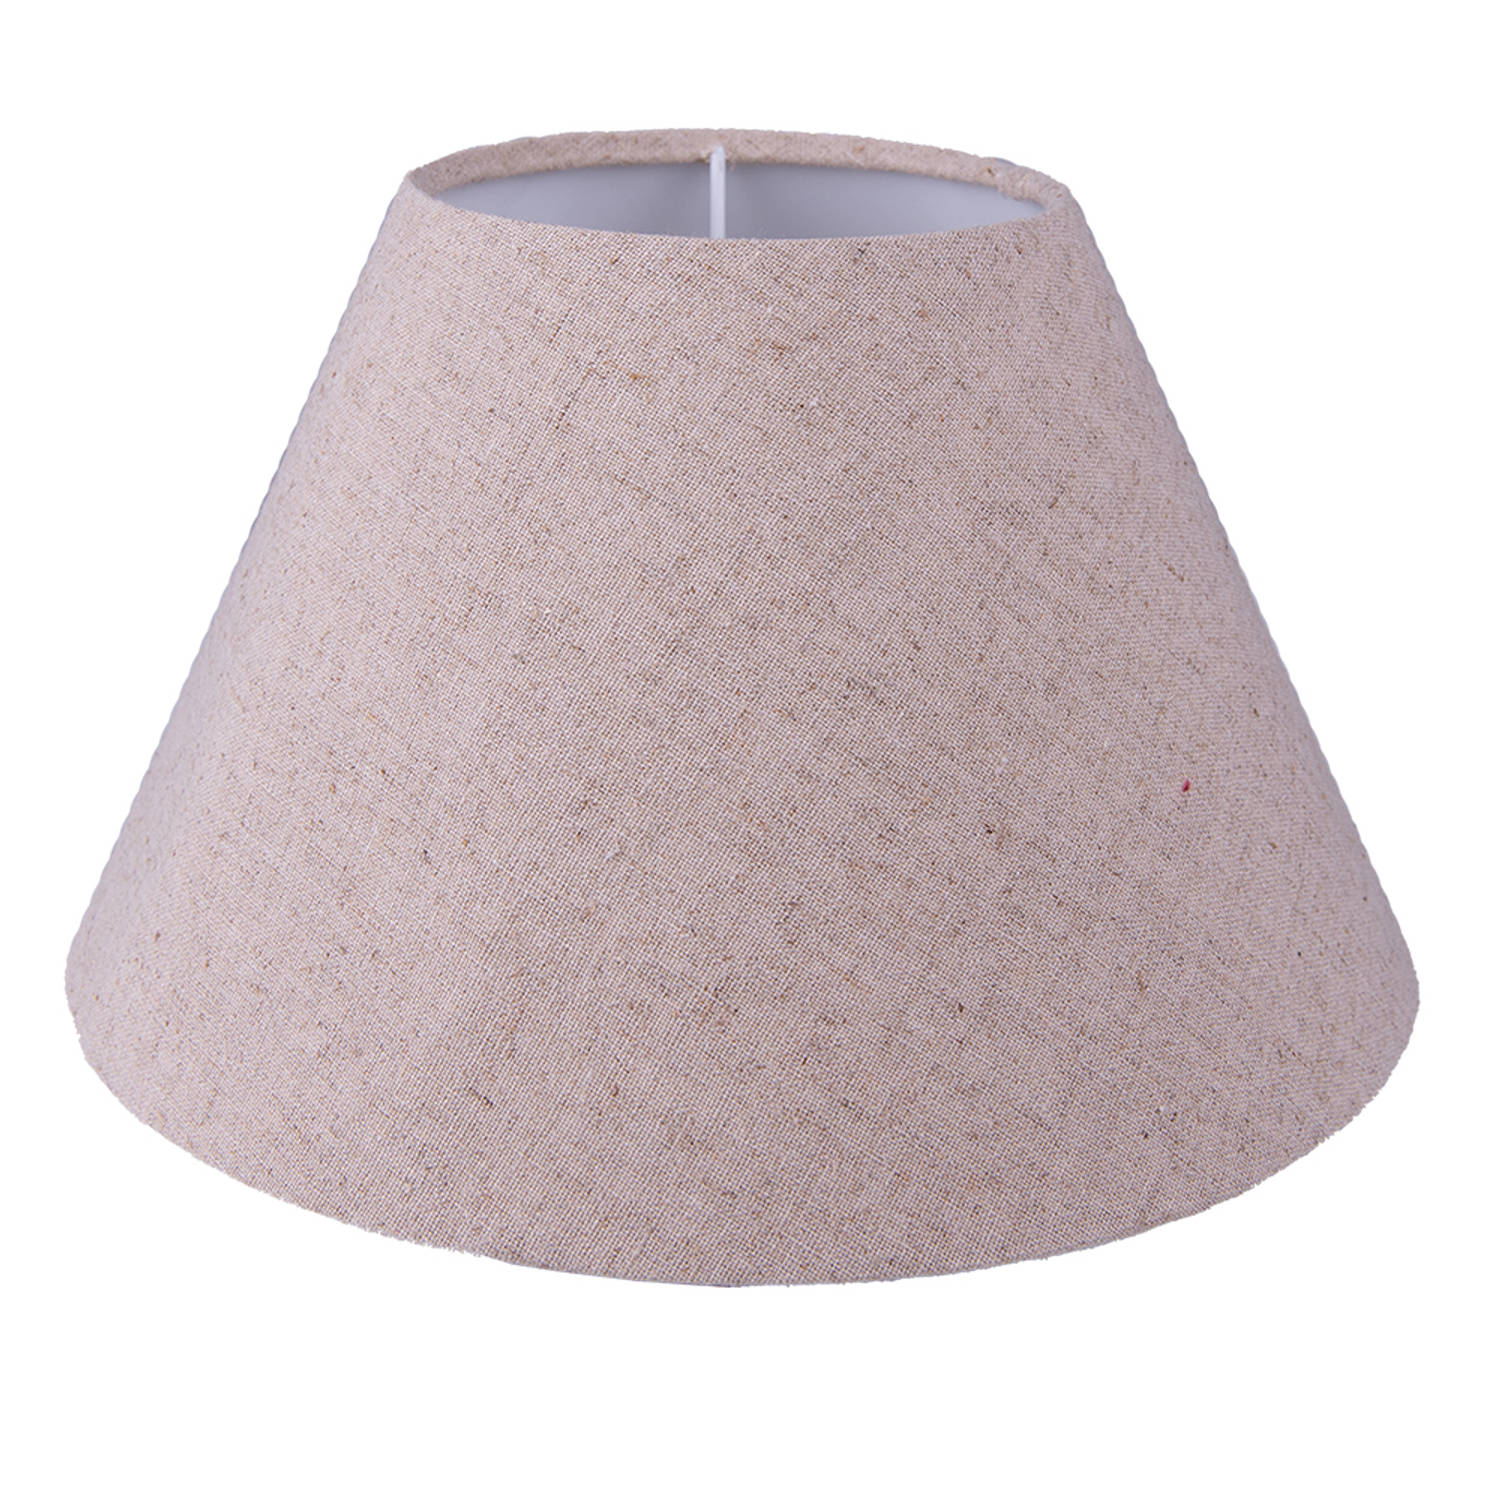 HAES DECO - Lampenkap - Natural Cosy - beige rond - formaat Ø 26x15 cm, voor Fitting E27 - Tafellamp, Hanglamp